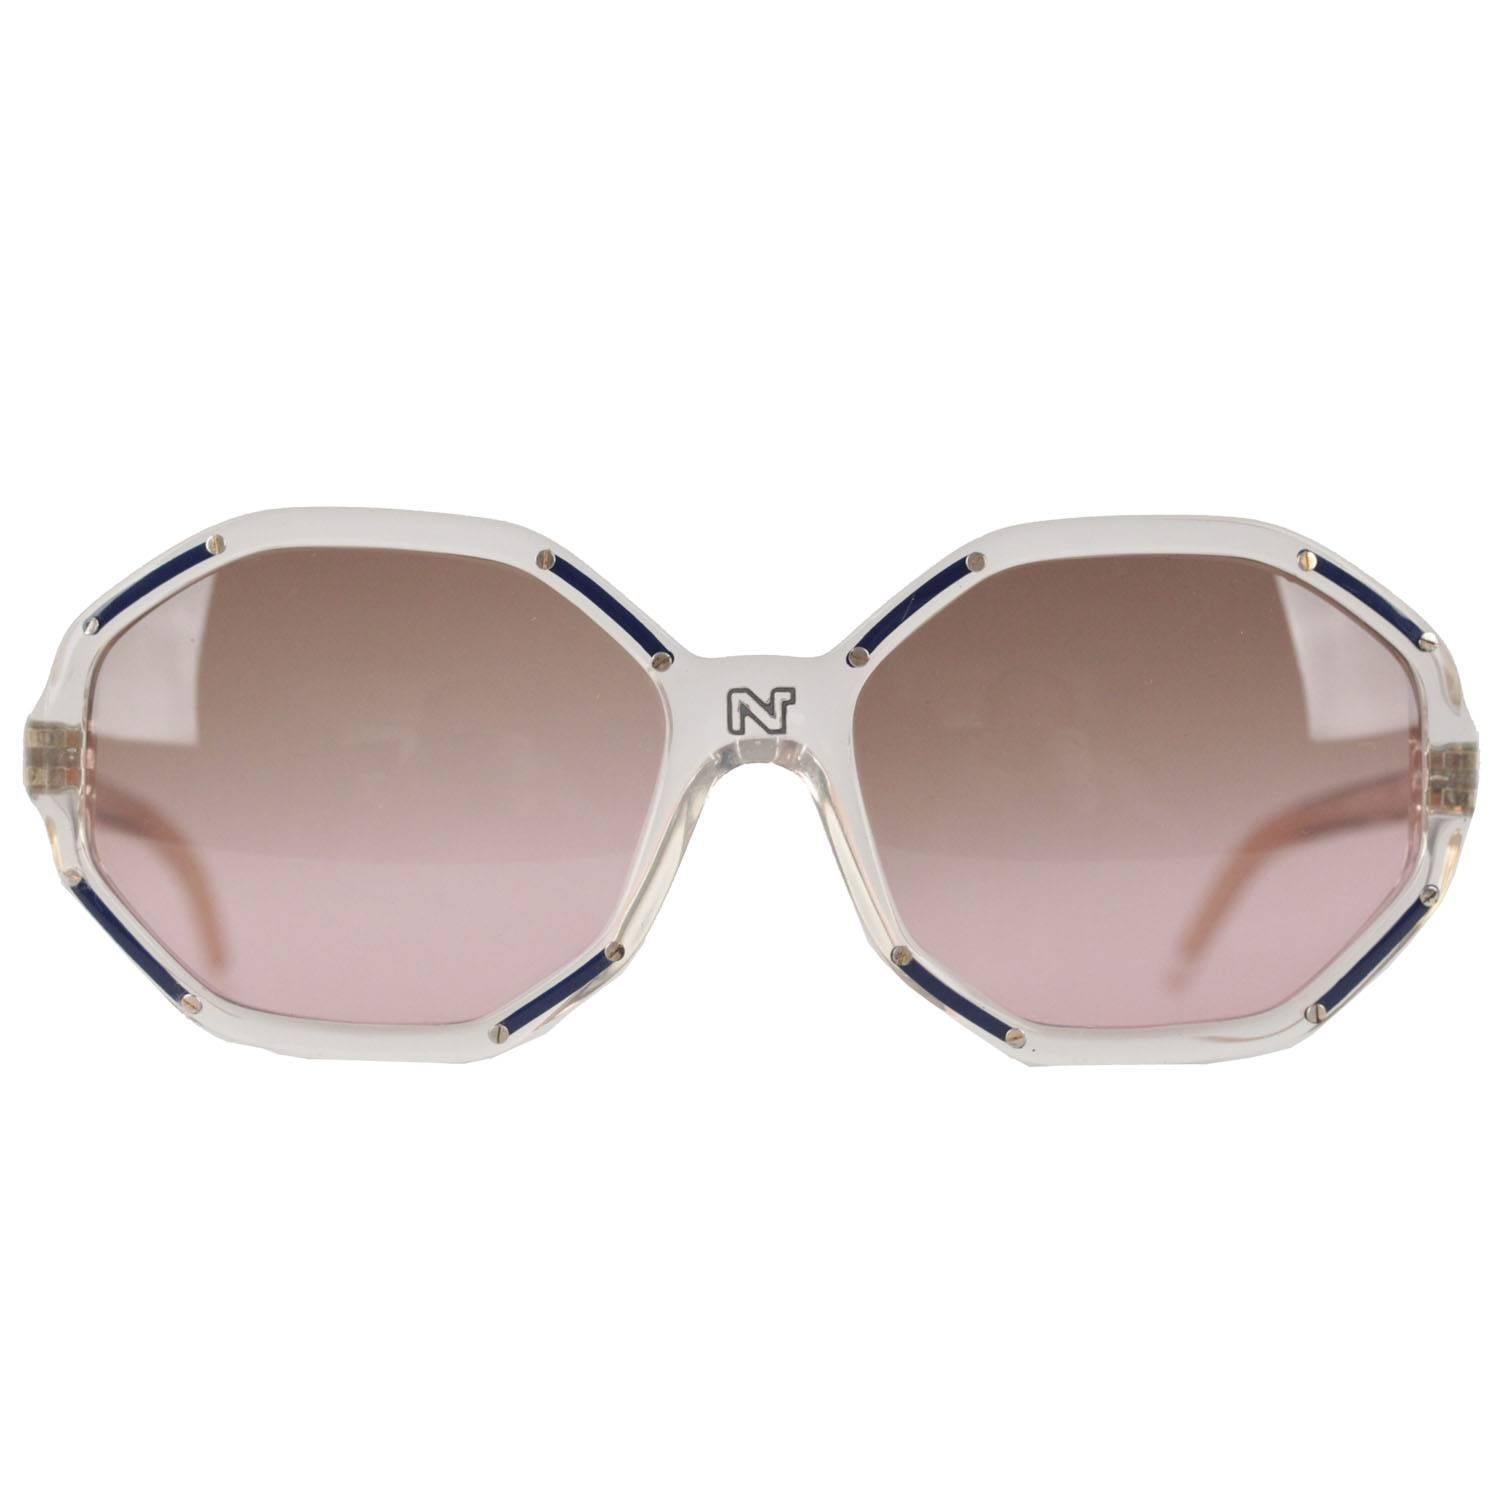 NINA RICCI Paris Vintage Sunglasses GOLD & BLUE Squared 56/20 142-VMA